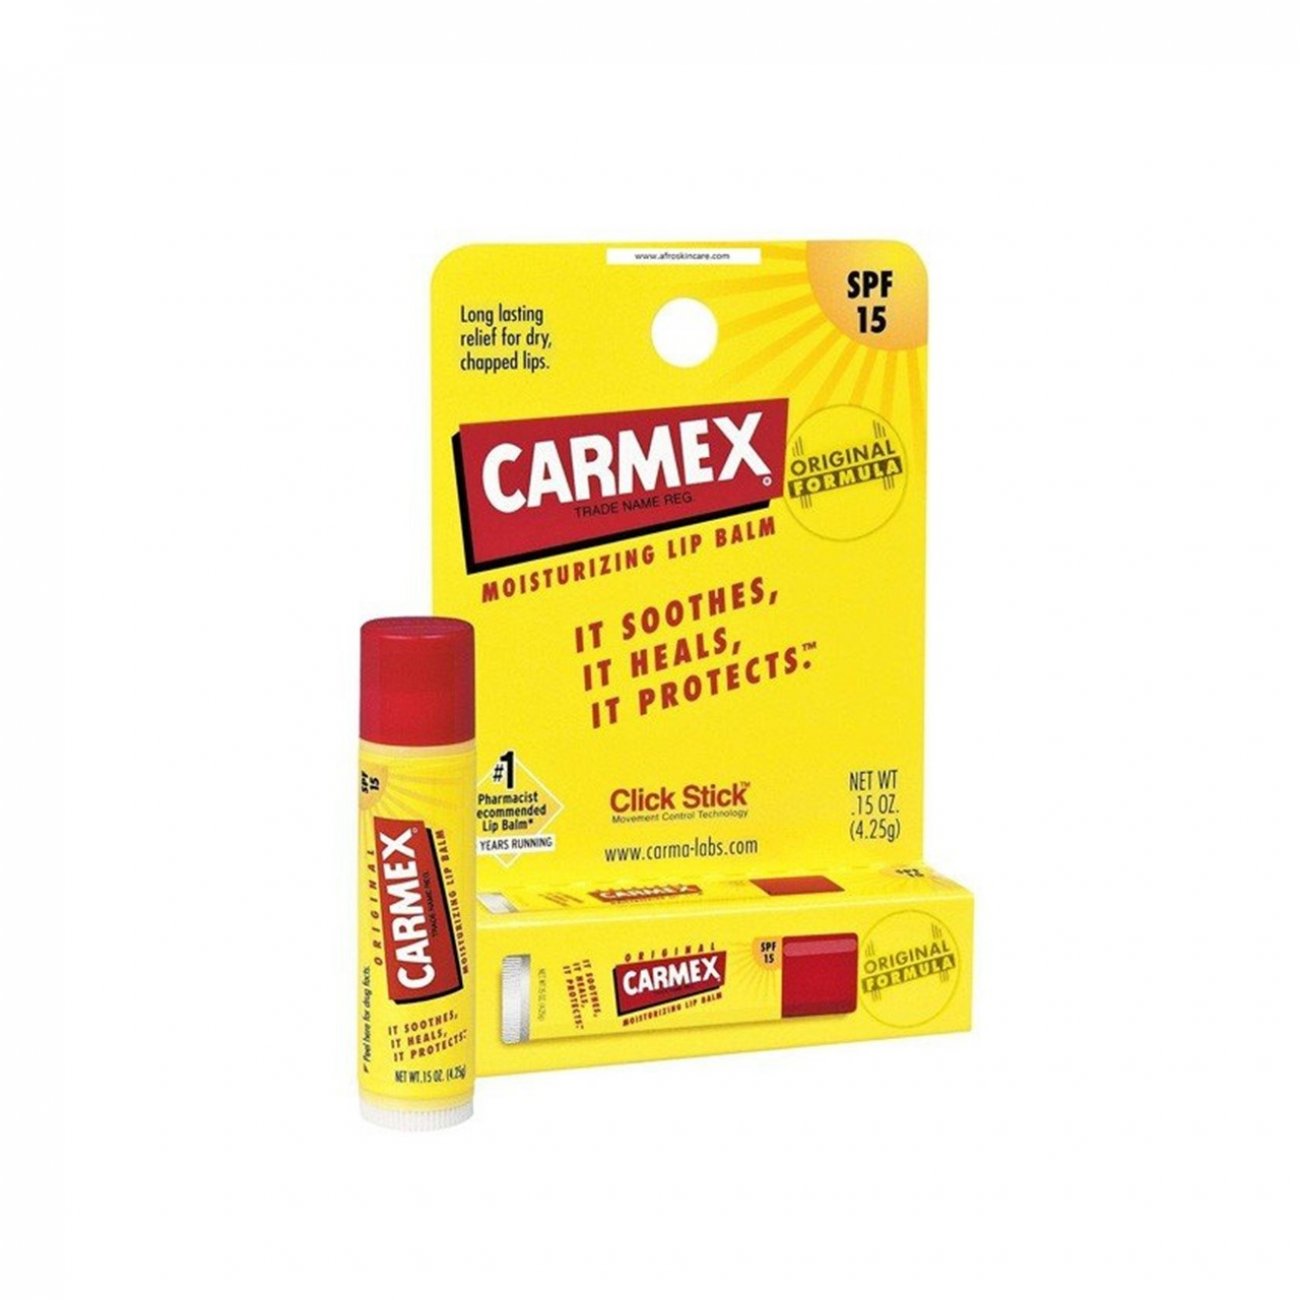 Buy Carmex Original Formula Moisturizing Lip Balm SPF15 4.25g Japan (JPY¥)